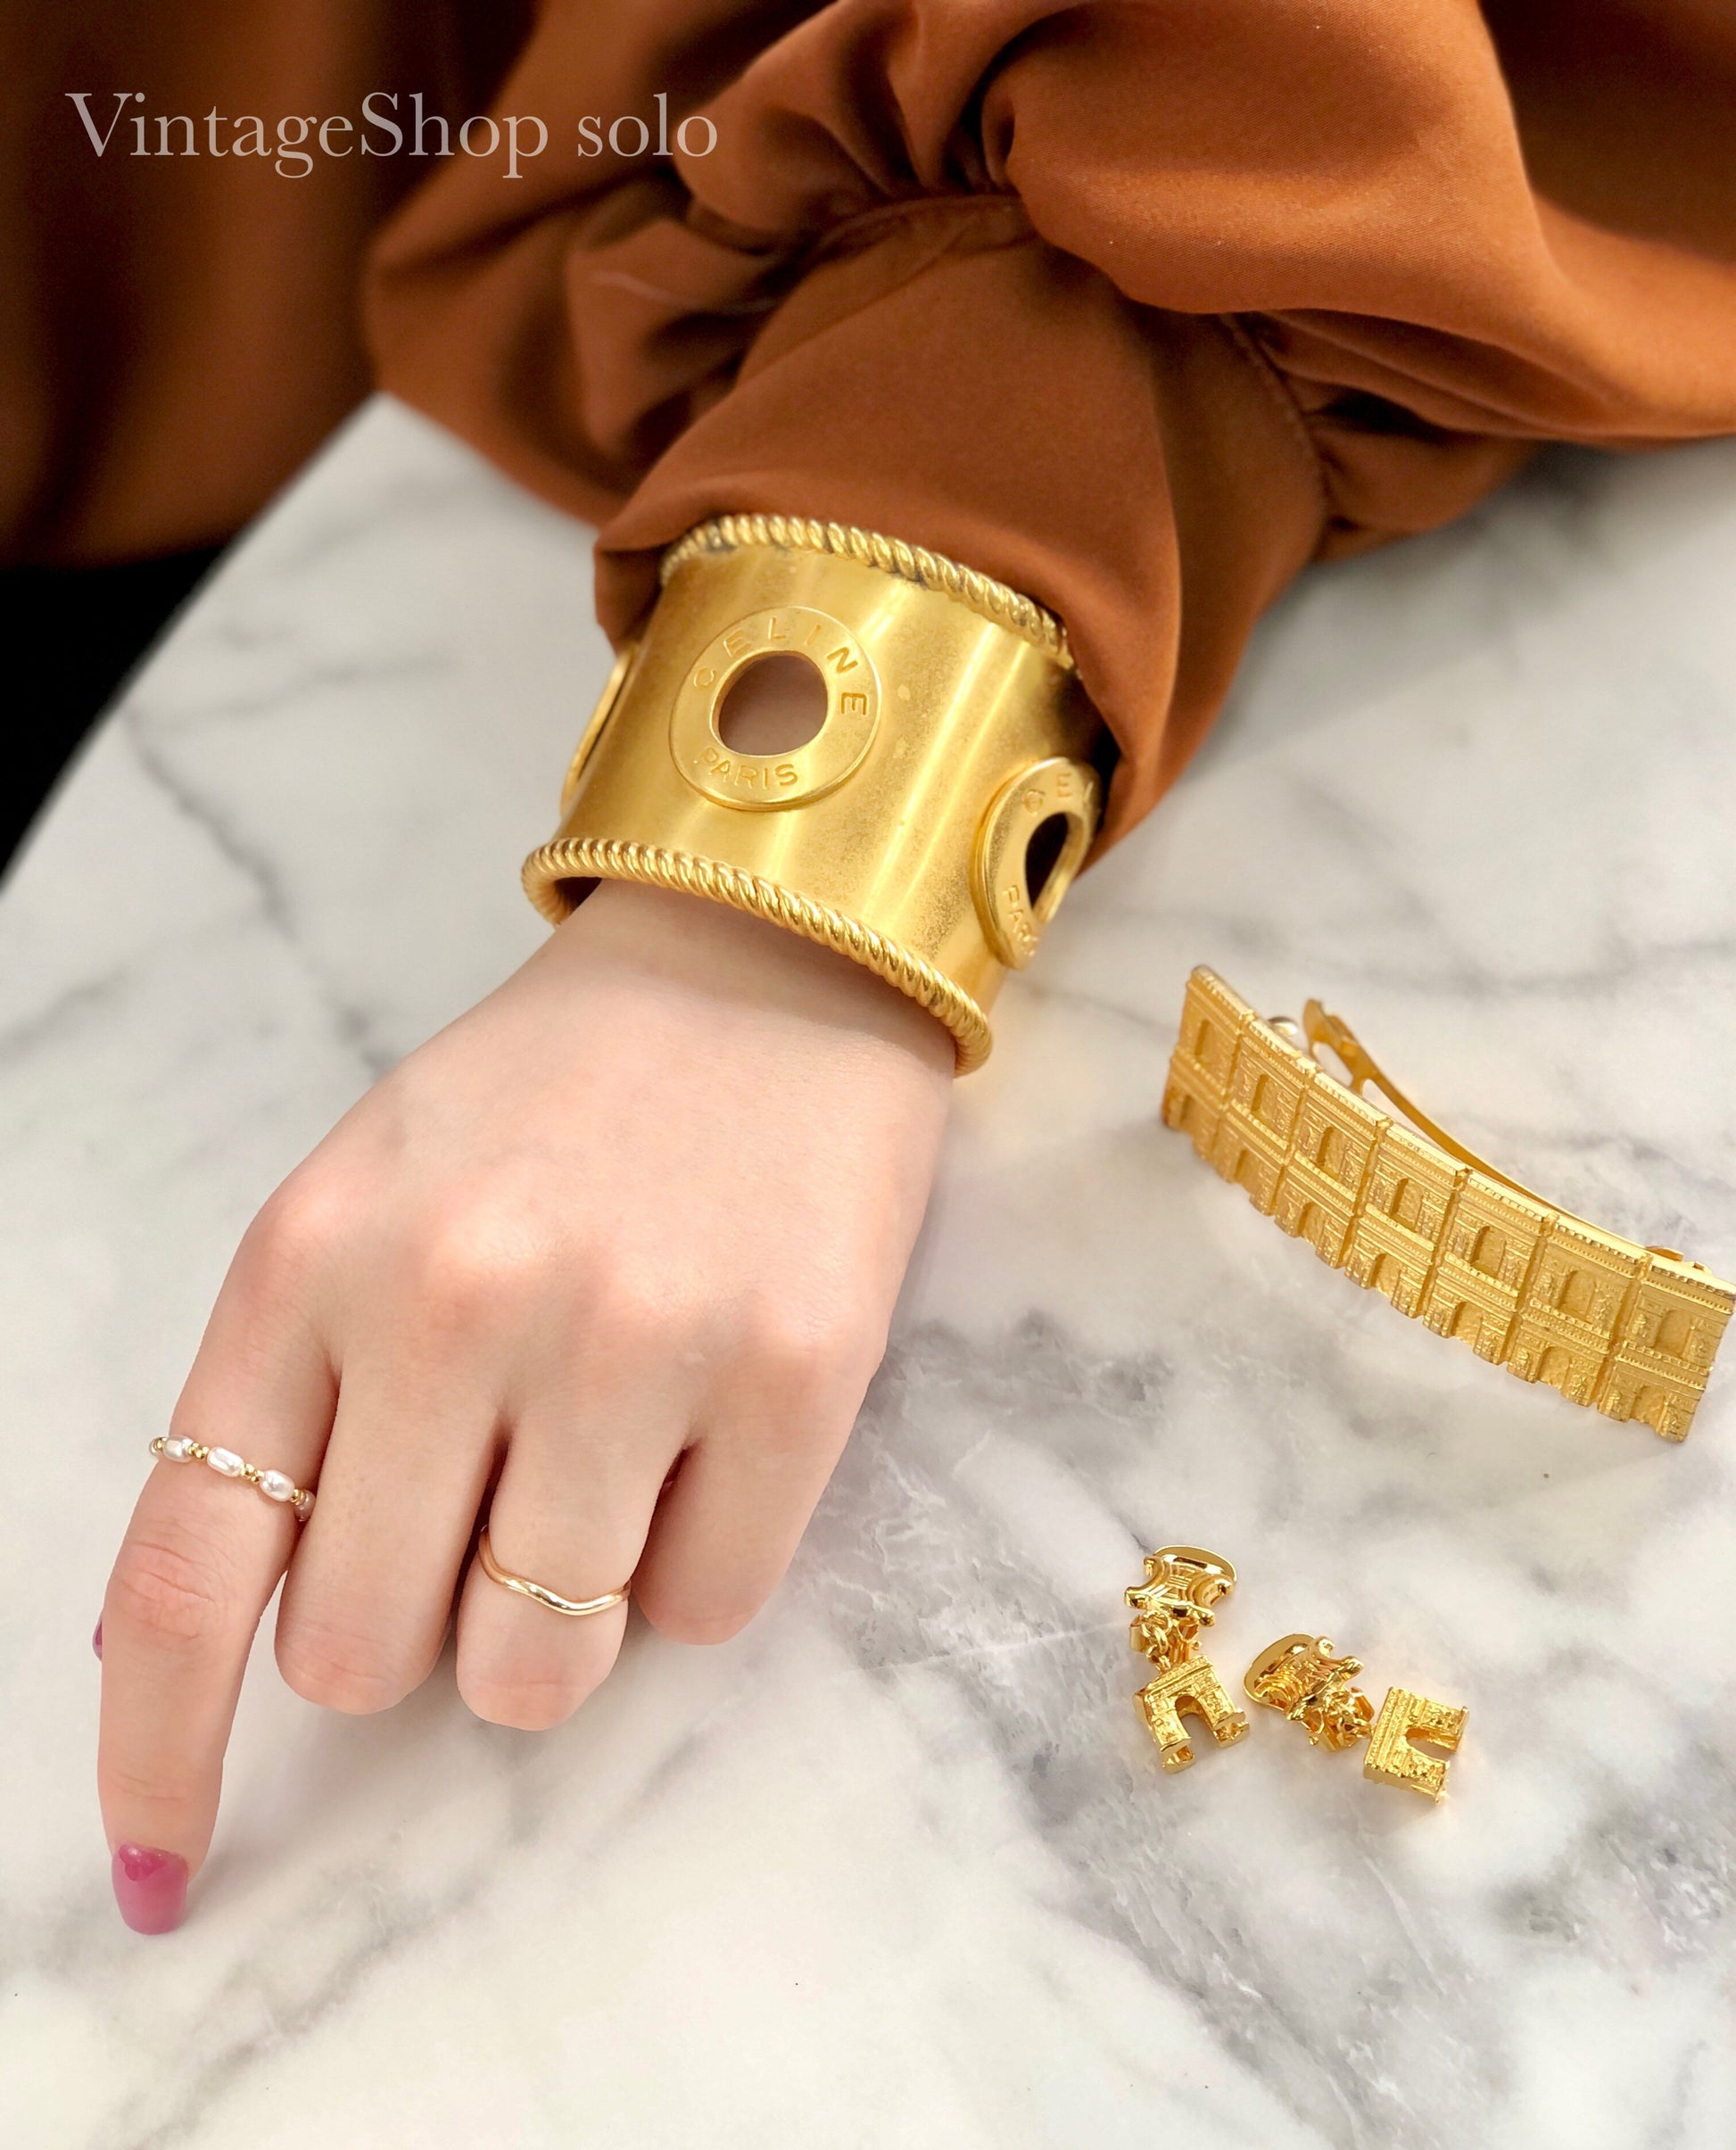 Christian Dior Vintage Money Clip - Gold Money Clips, Accessories